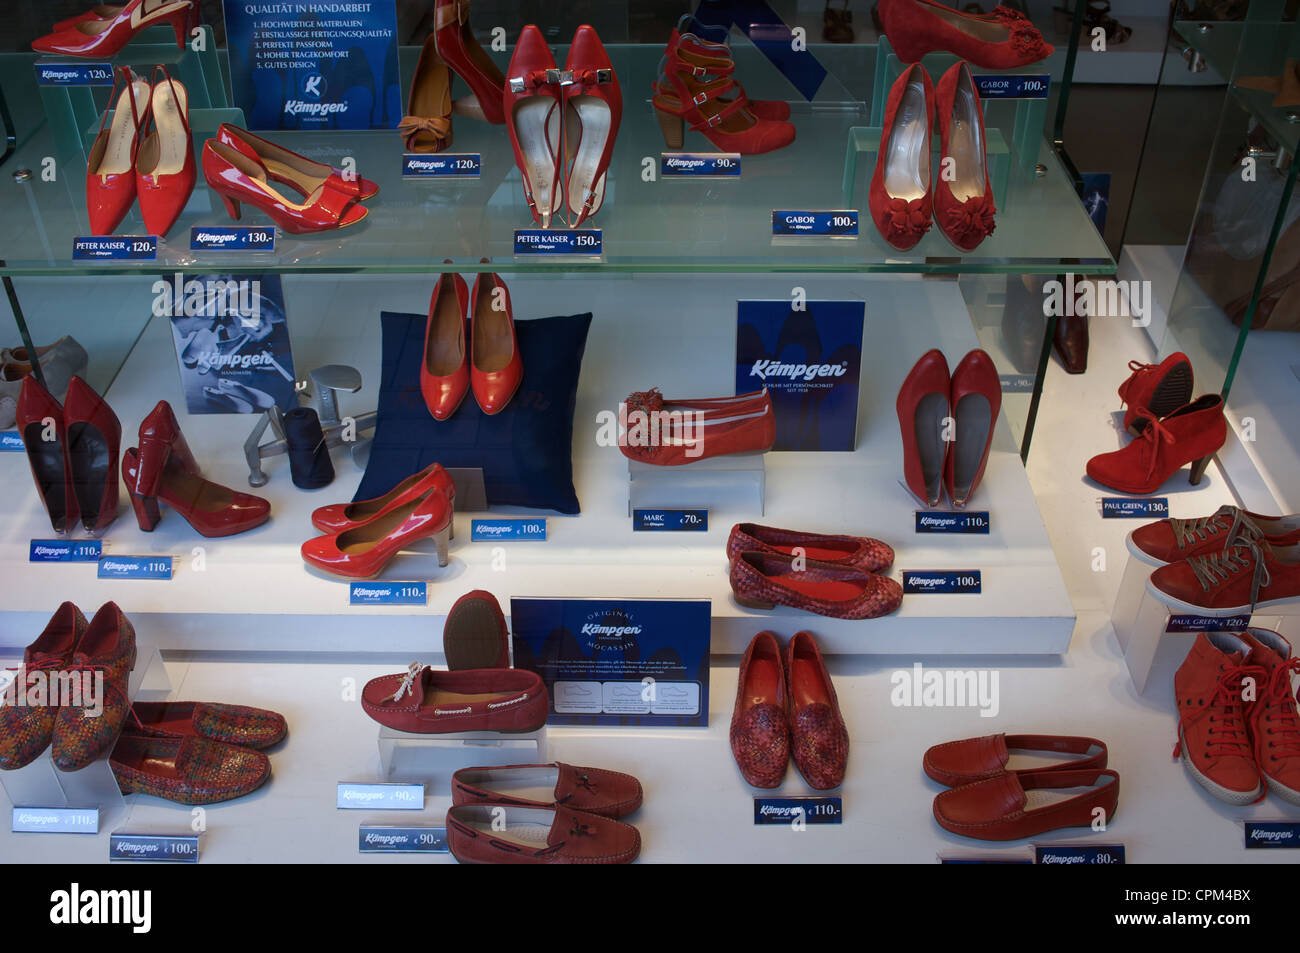 Kampgen shoe shop Germany Stock Photo - Alamy